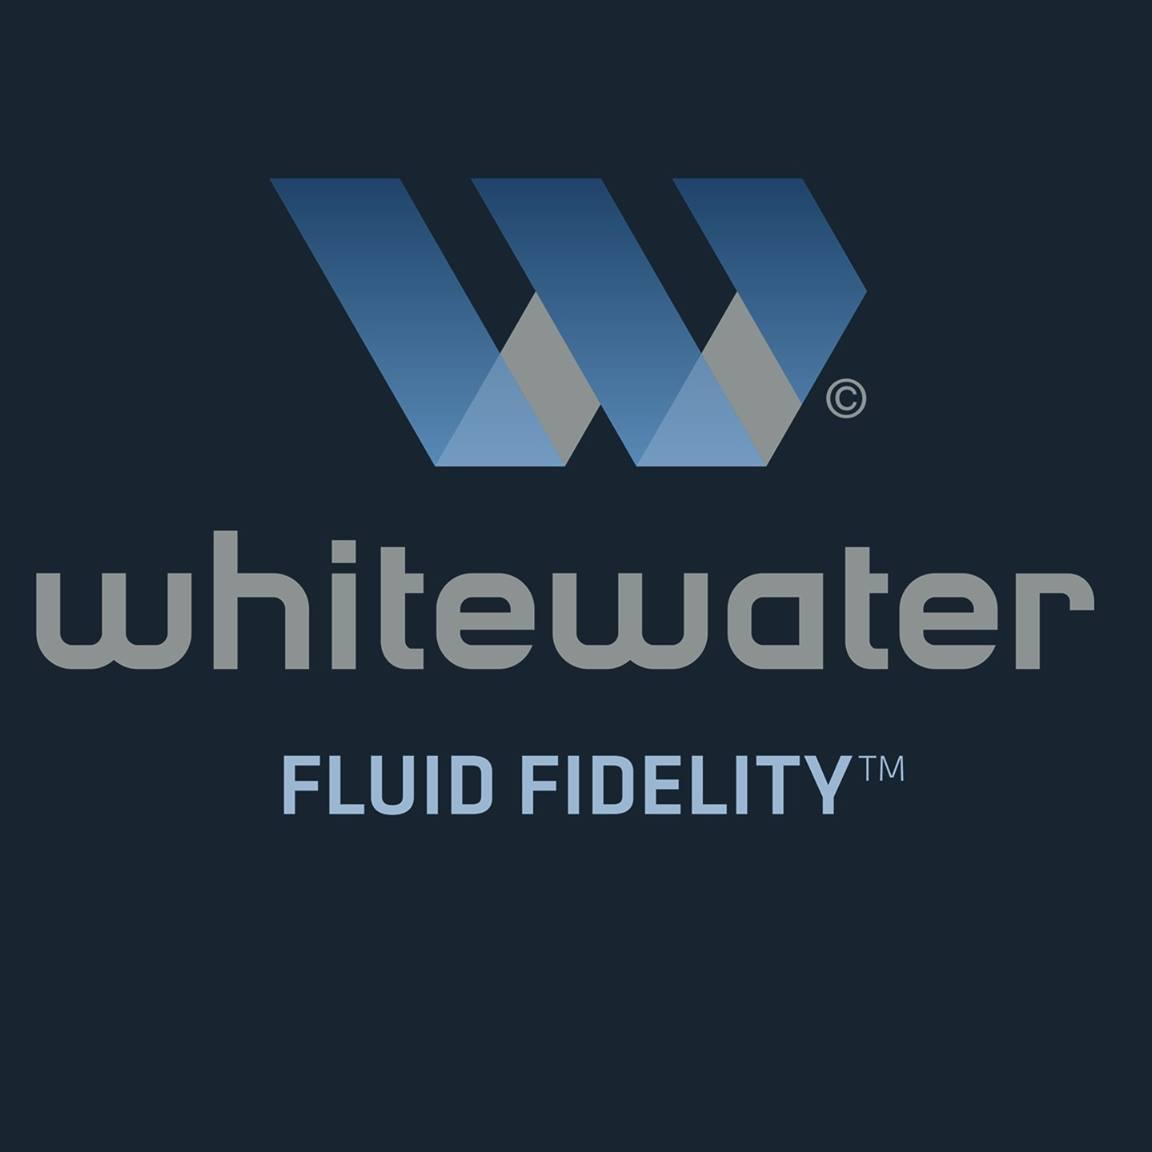 WhiteWater Management